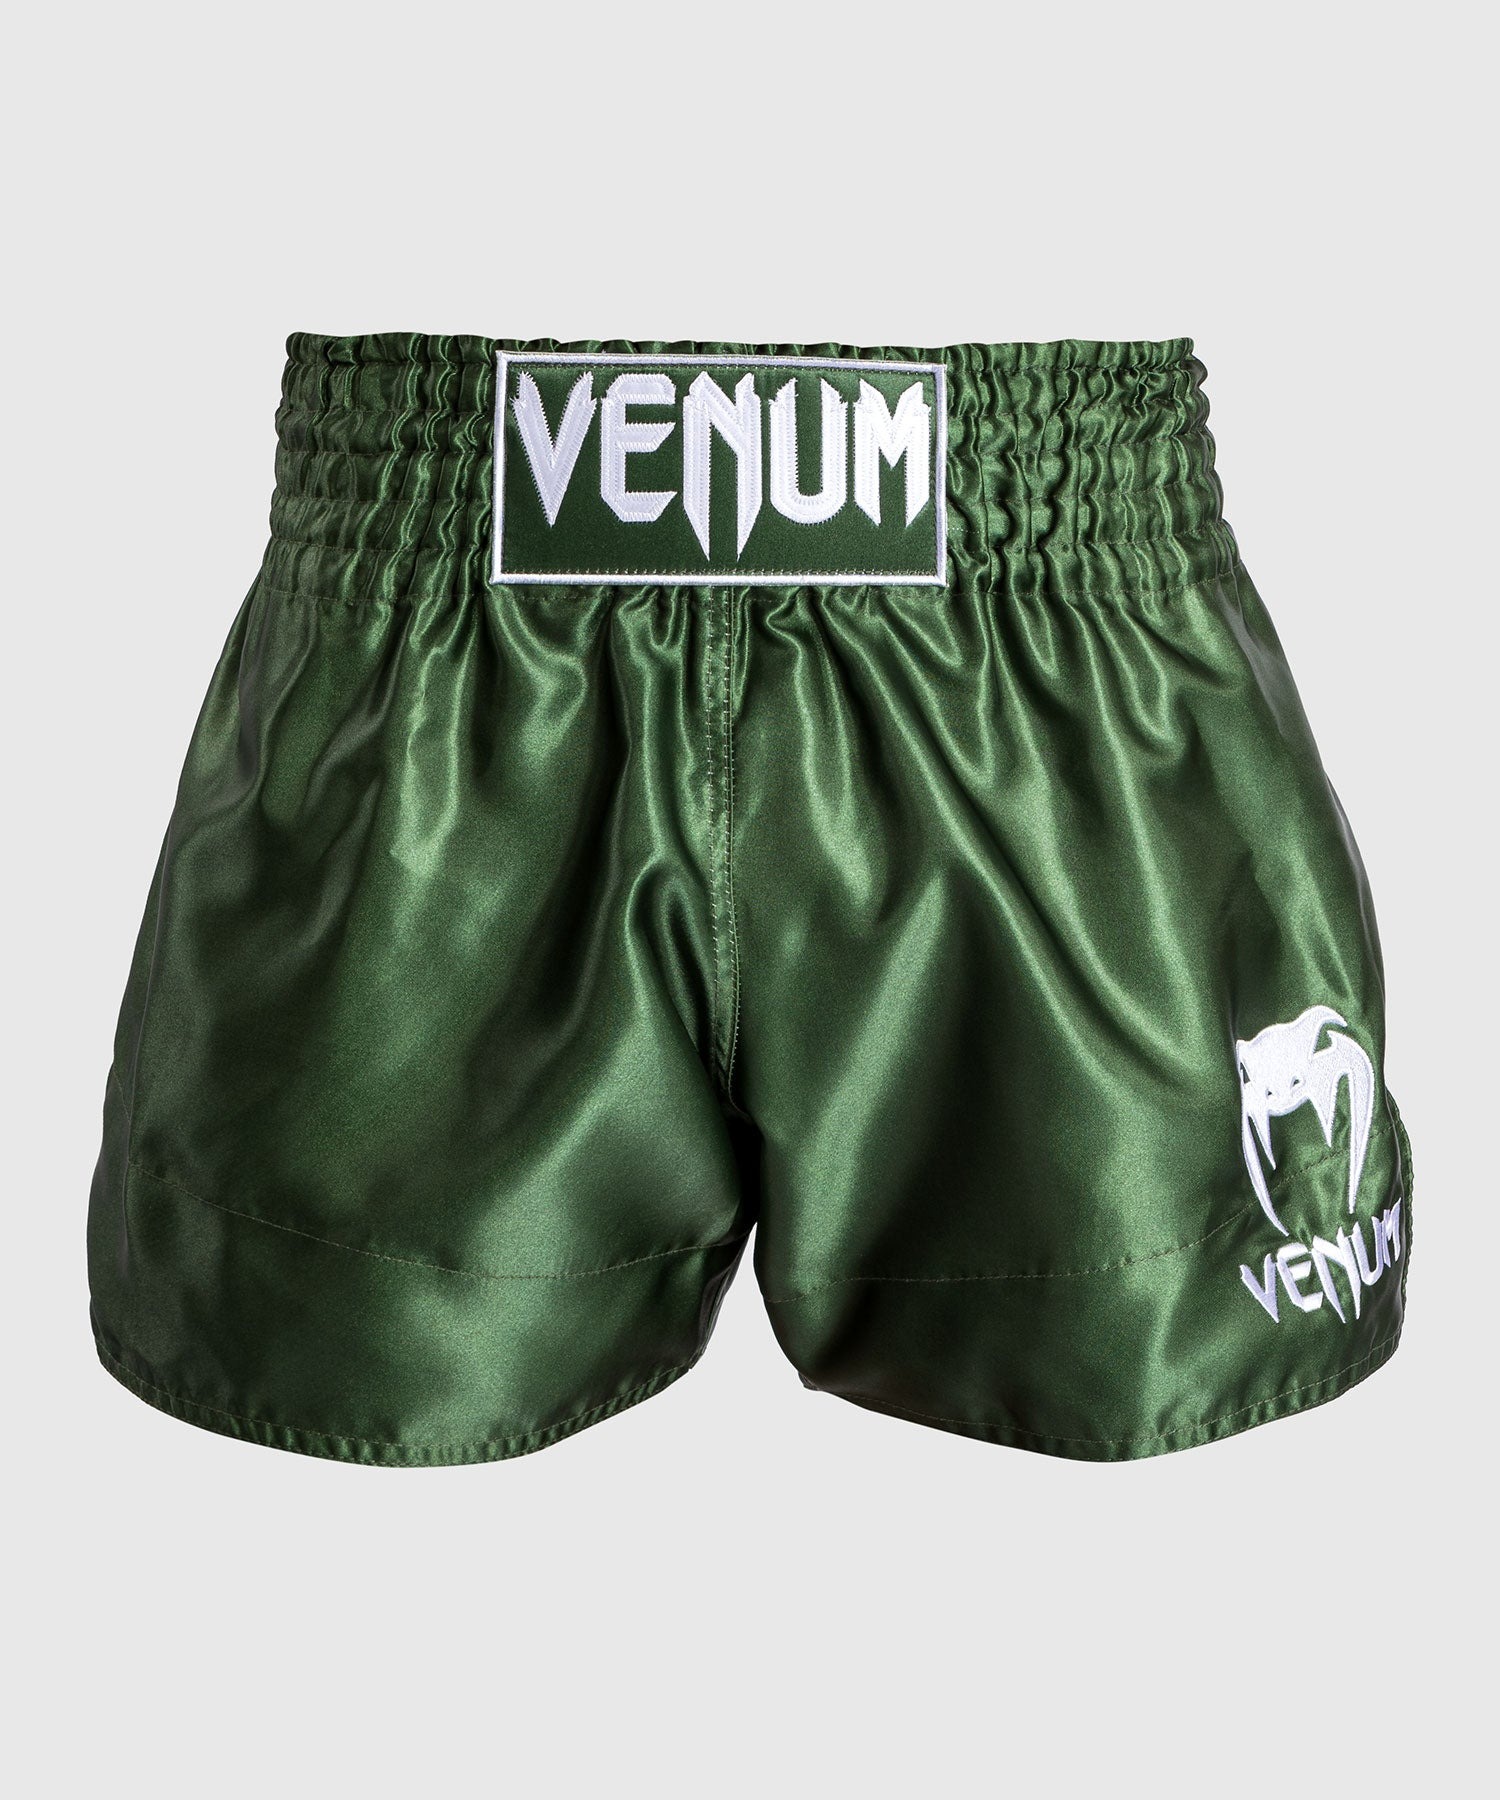 Venum Classic T-shirt green / green > Free Shipping